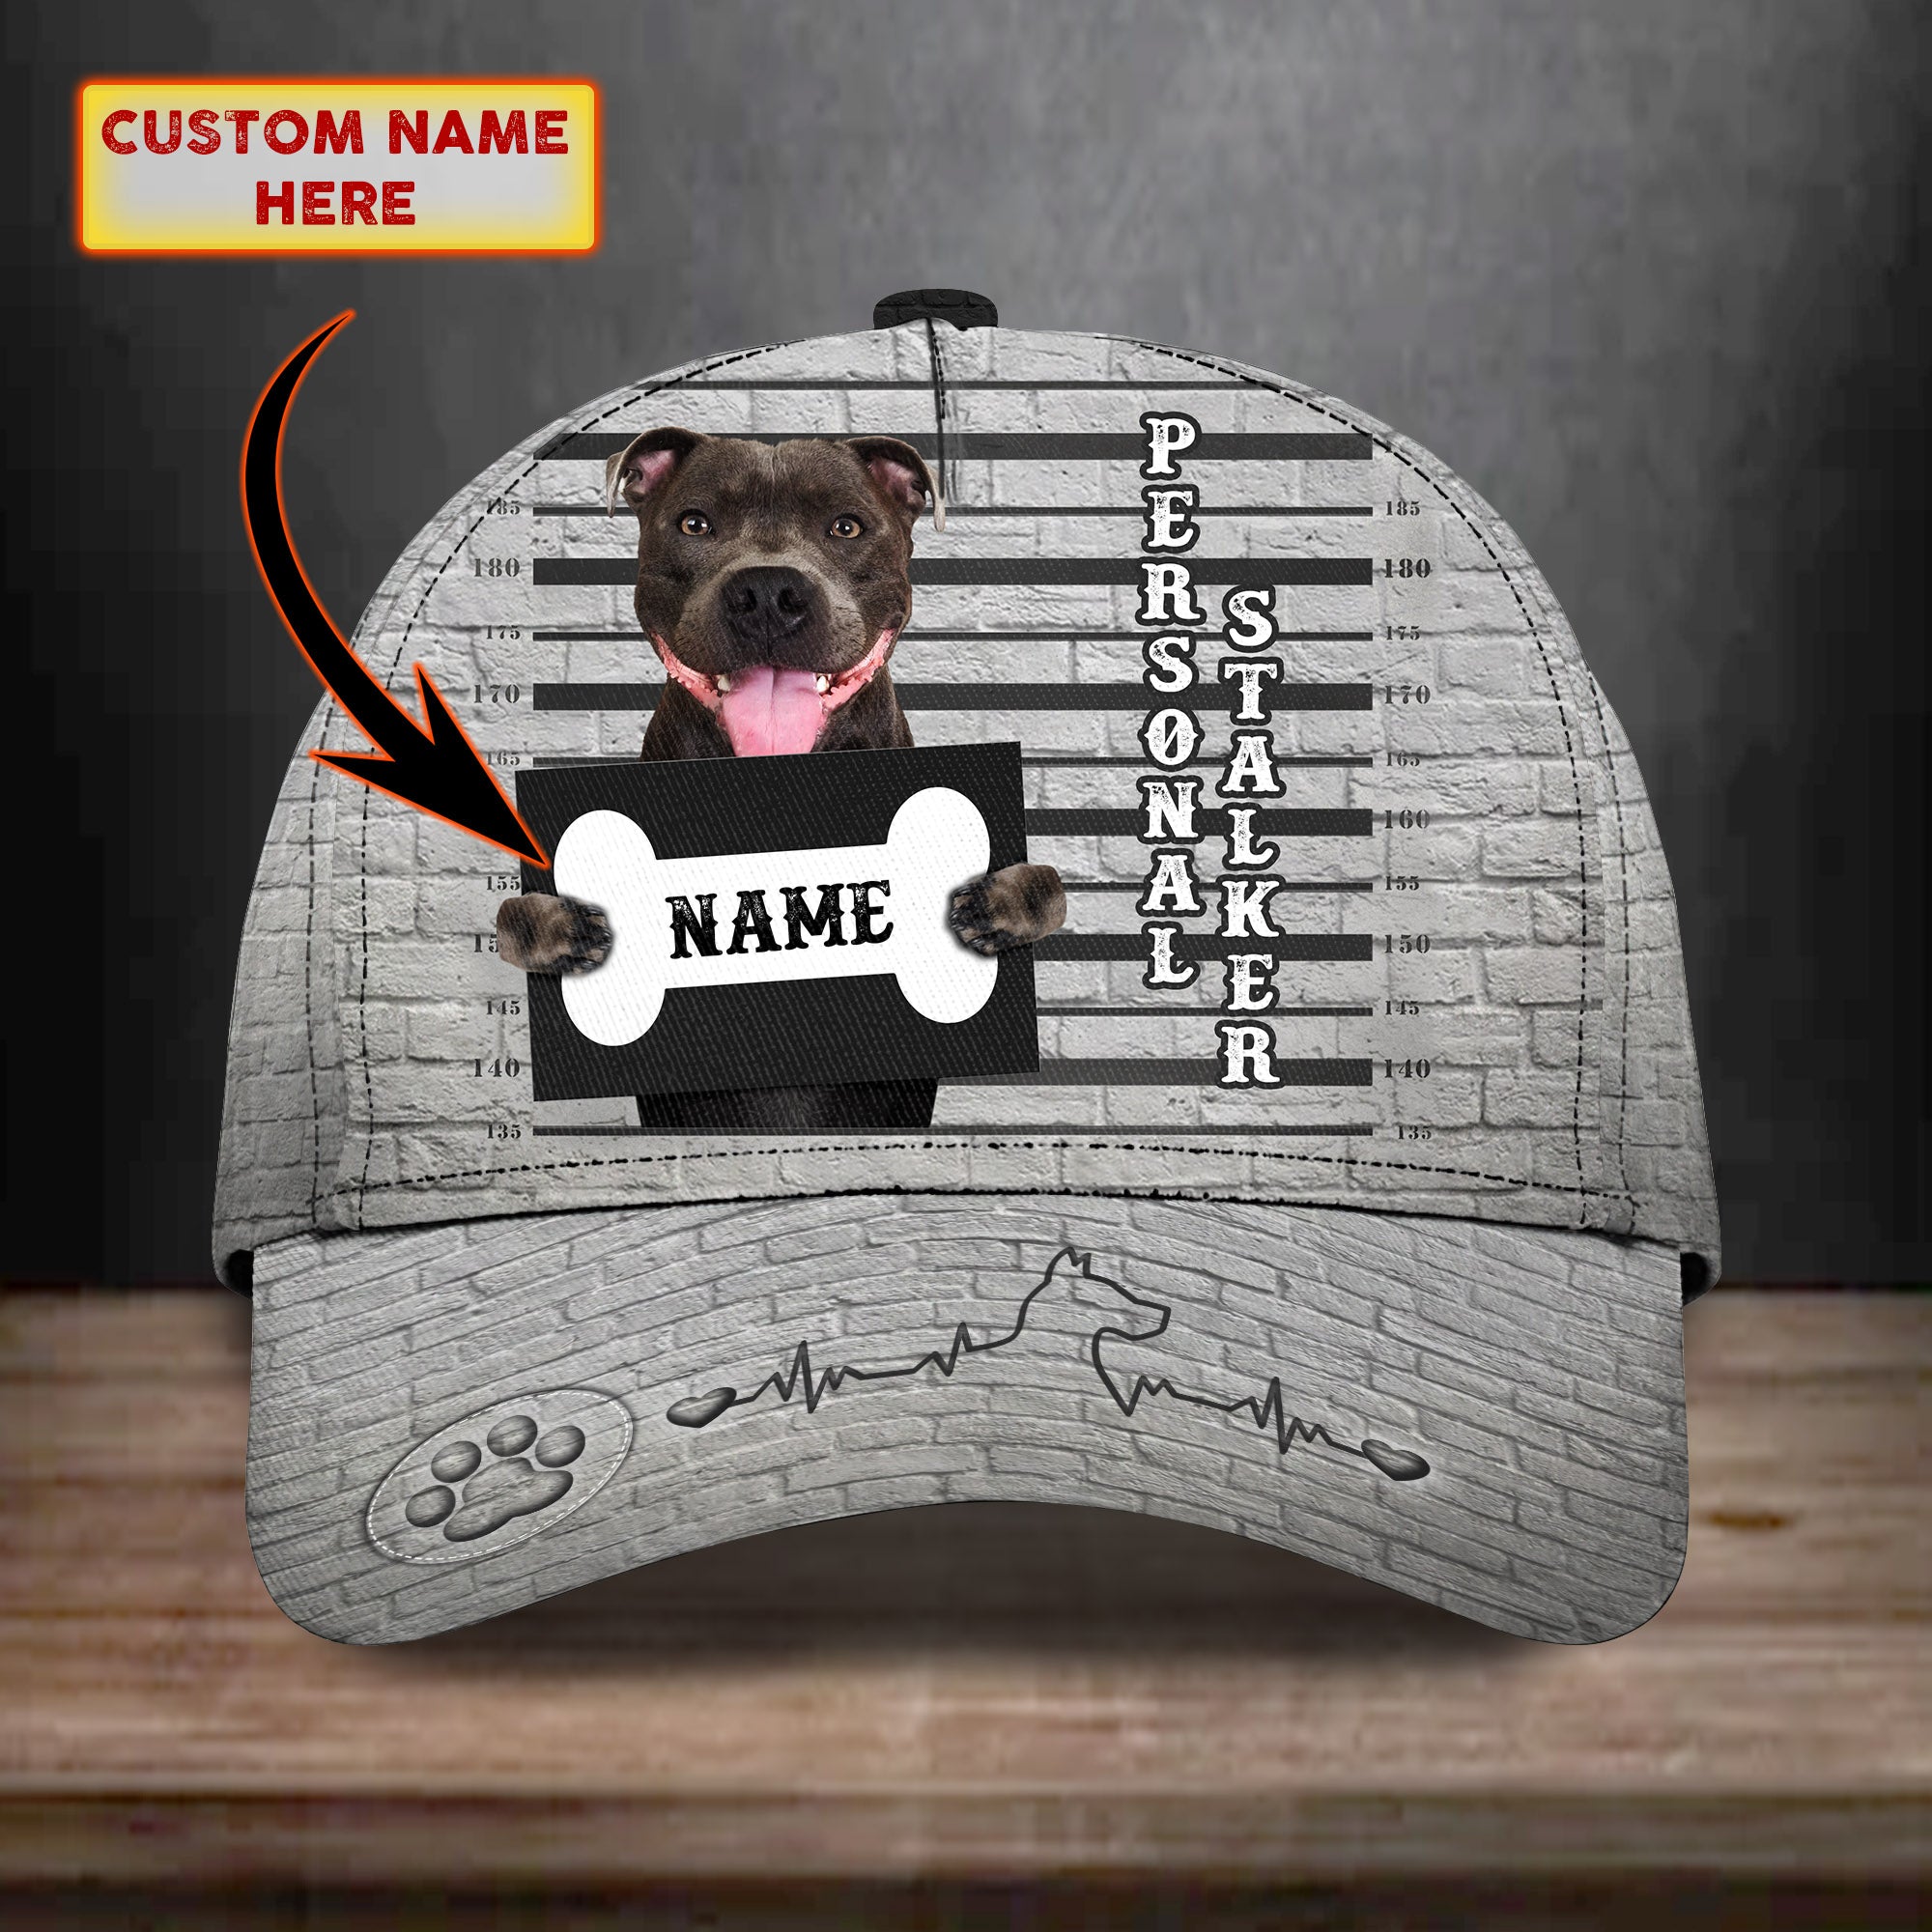 Pitbull - Personalized Name Cap - Nmd 08